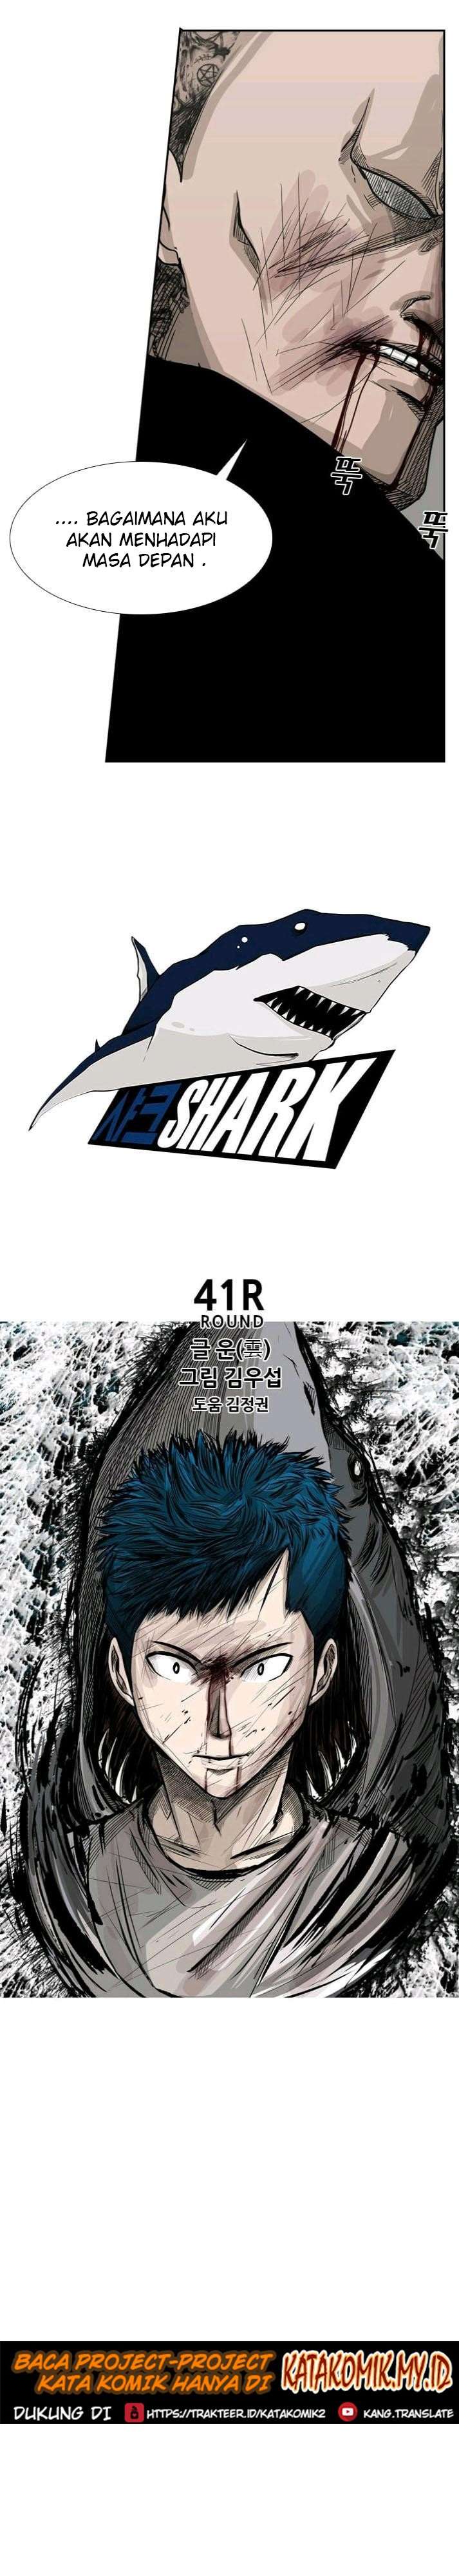 Shark Chapter 41